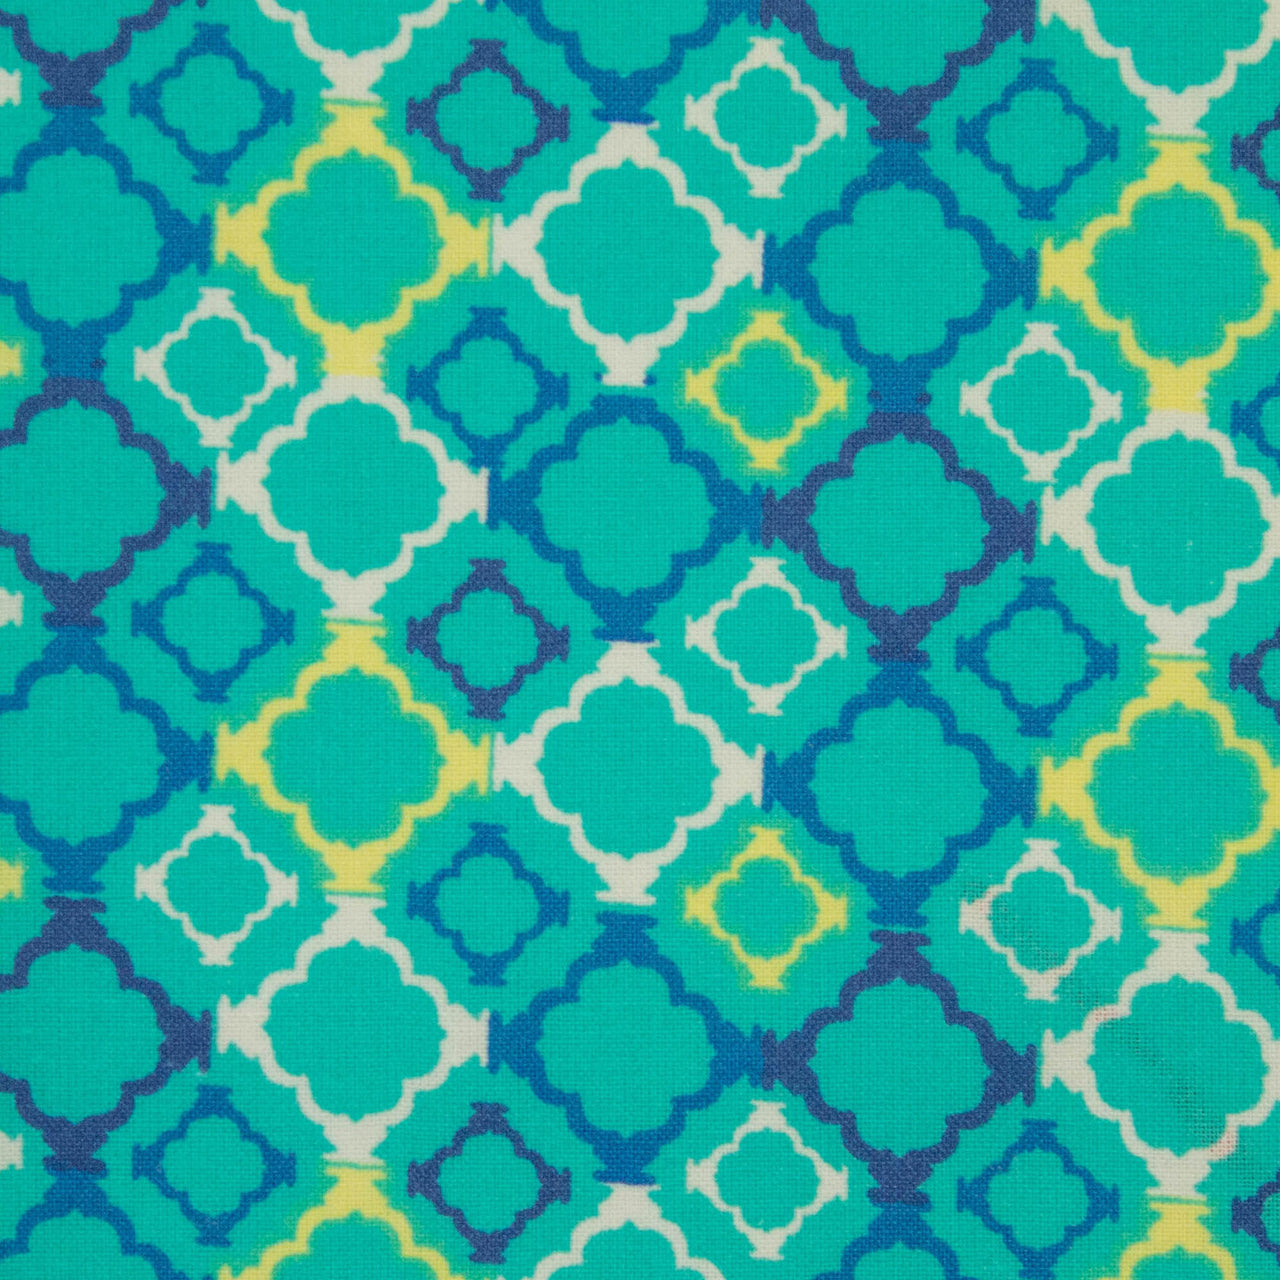 Green Geometric Printed Cotton Fabric - Square, Diamond, Harlequin Design